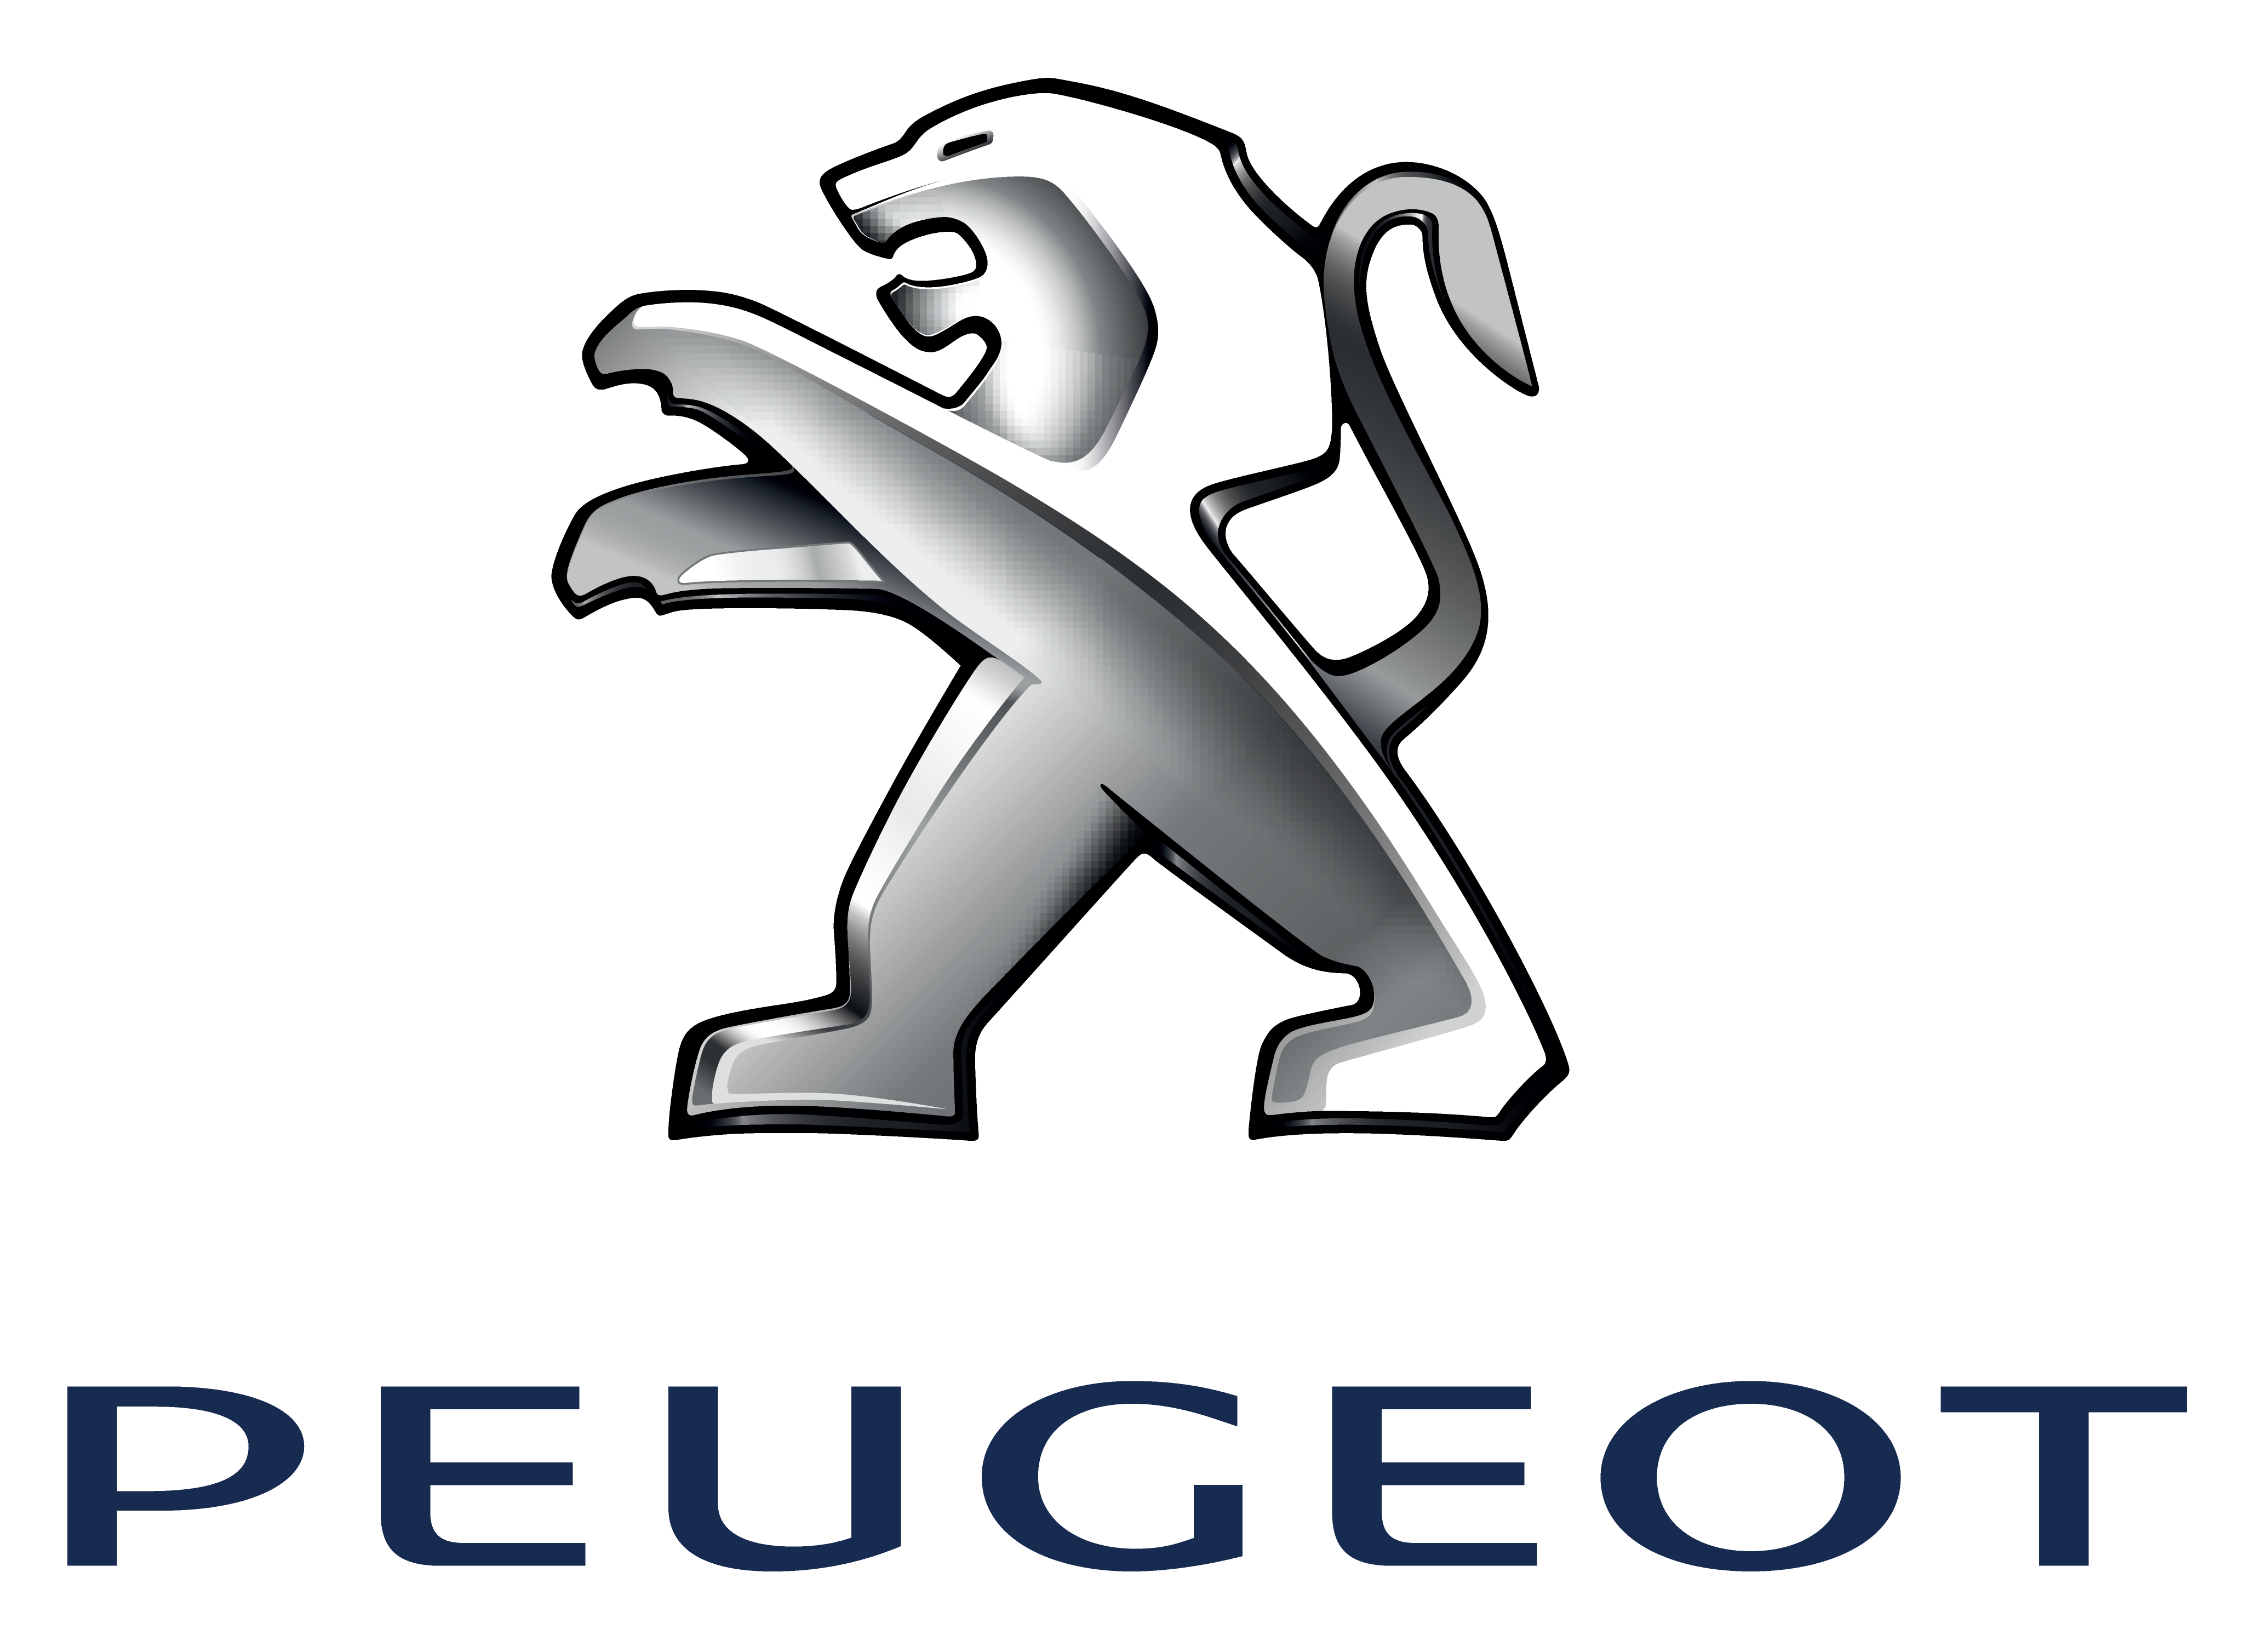 Peugeot Car Png Images Free D